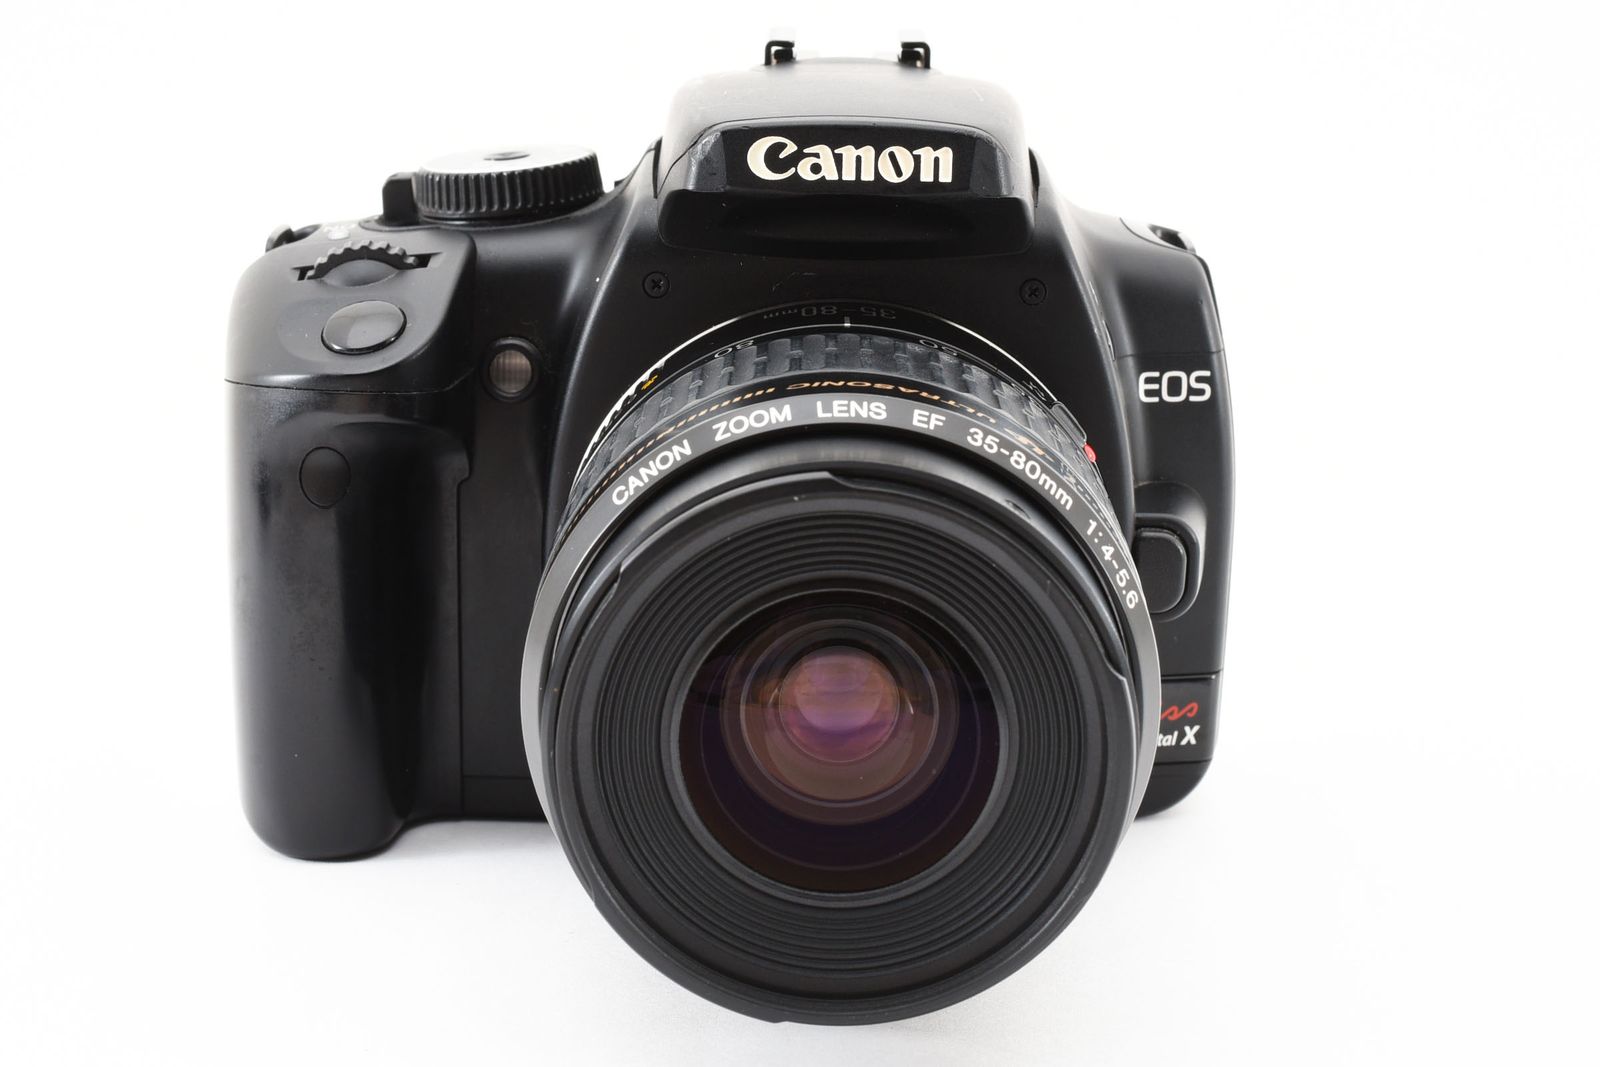 iPhoneへ転送OK♪ Canon キャノン EOS Kiss X #6955 - デジタルカメラ